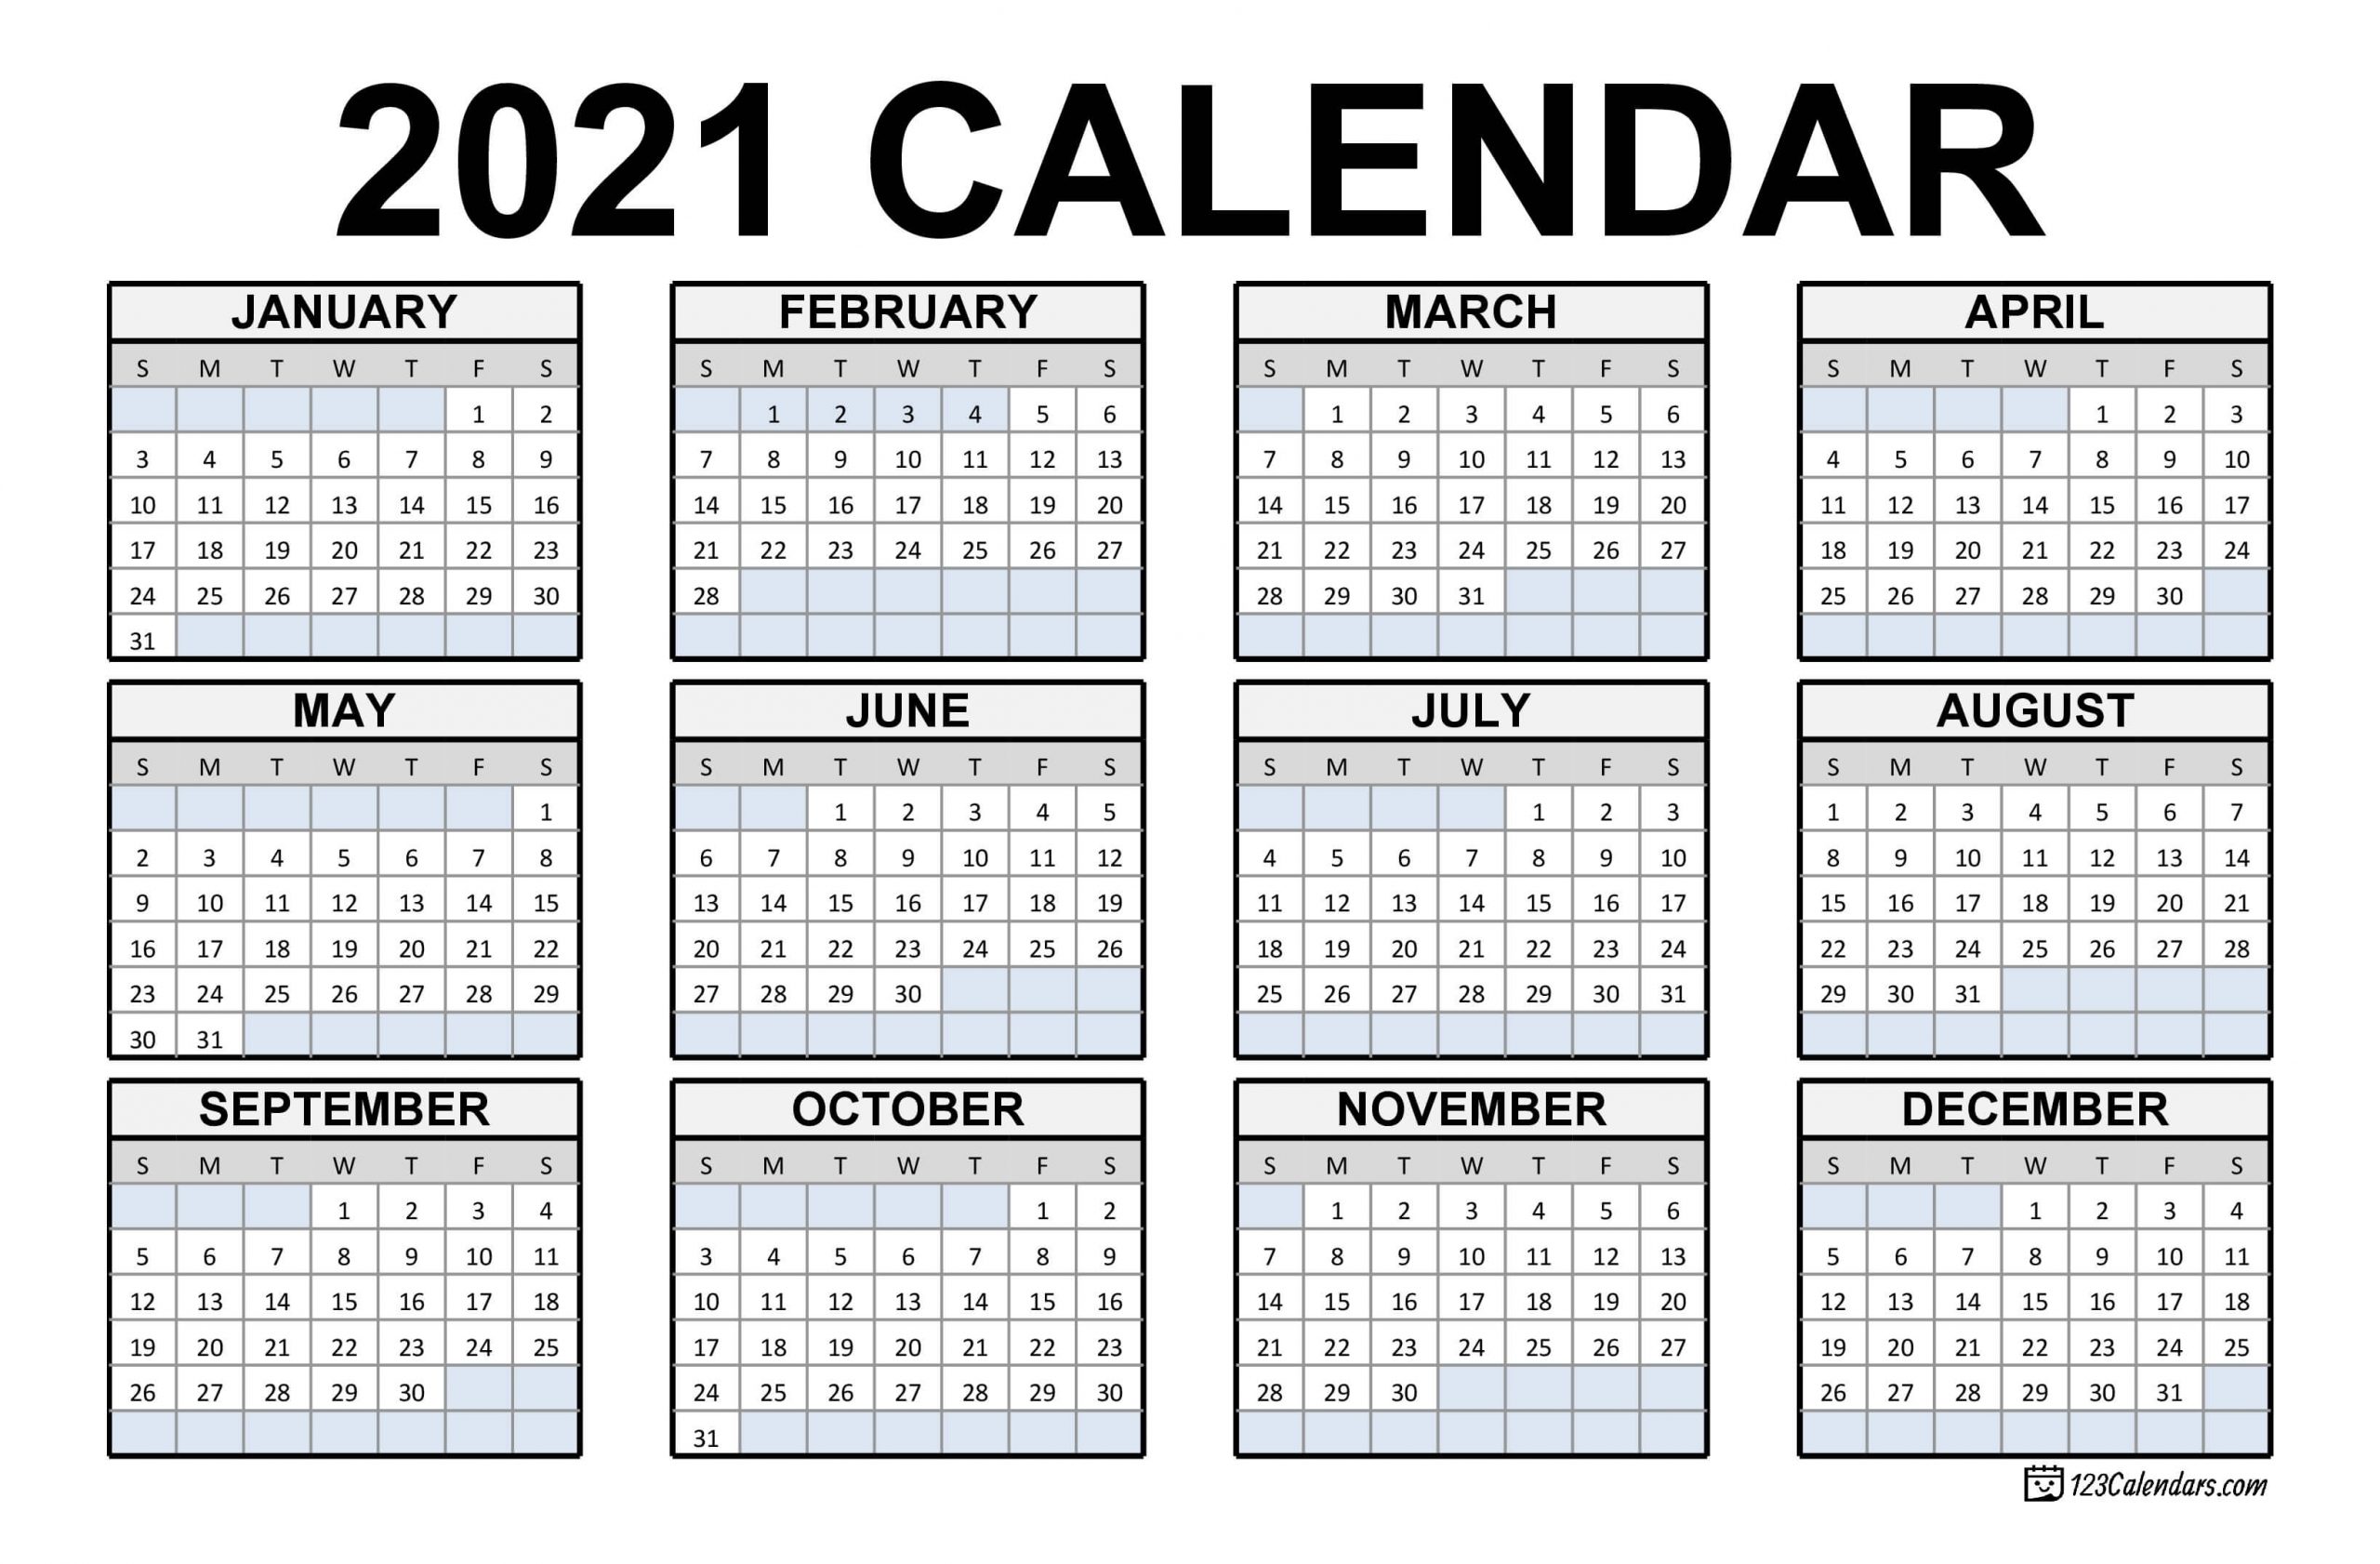 Get November 2021 Calendar India